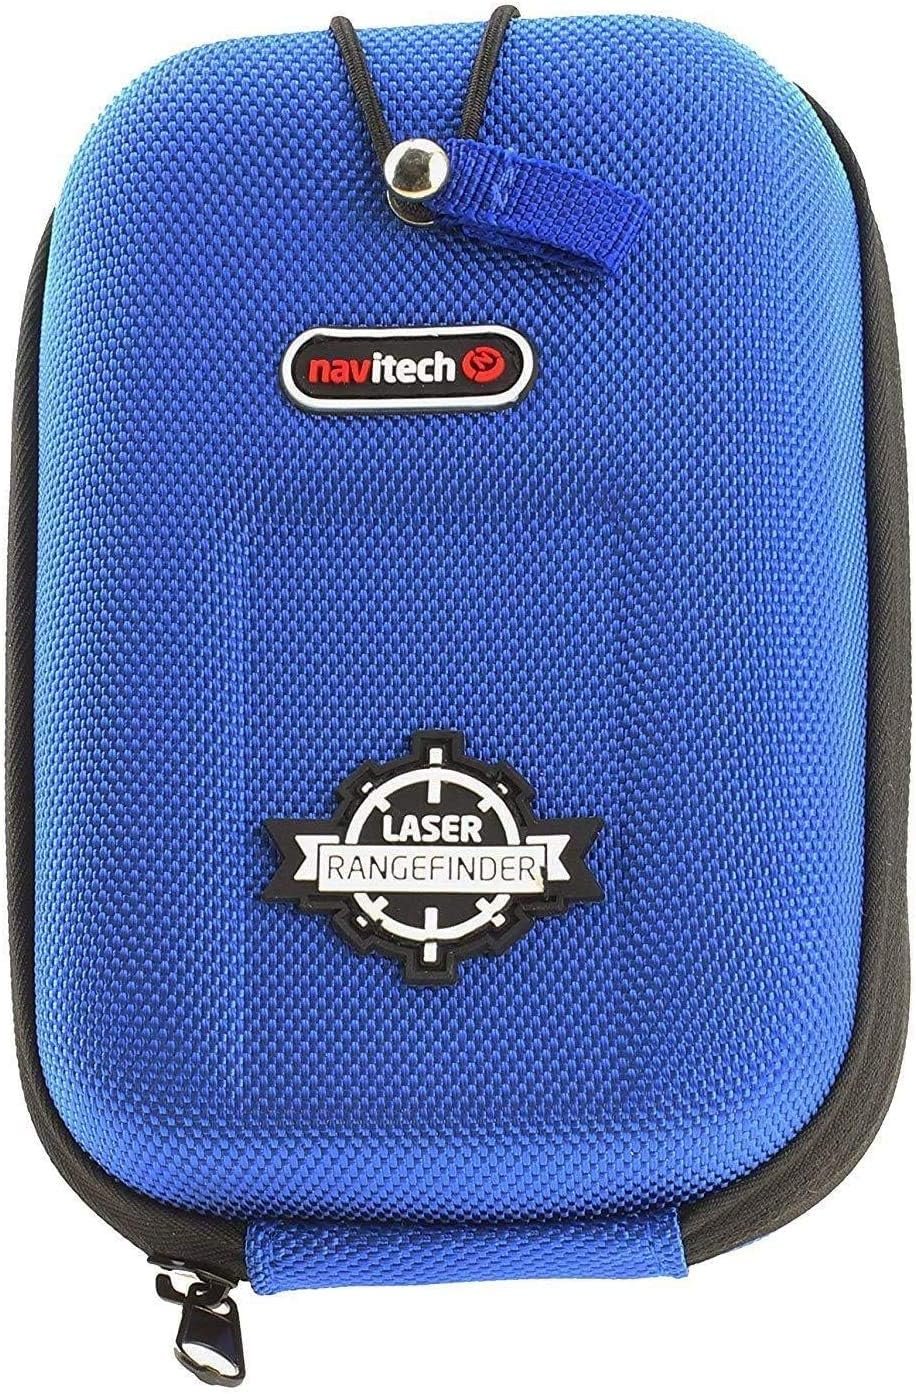 Navitech Blue EVA Hard Case/Rangefinder Cover Compatible with Blue Tees Golf - Series 3 Max with Laser Rangefinder